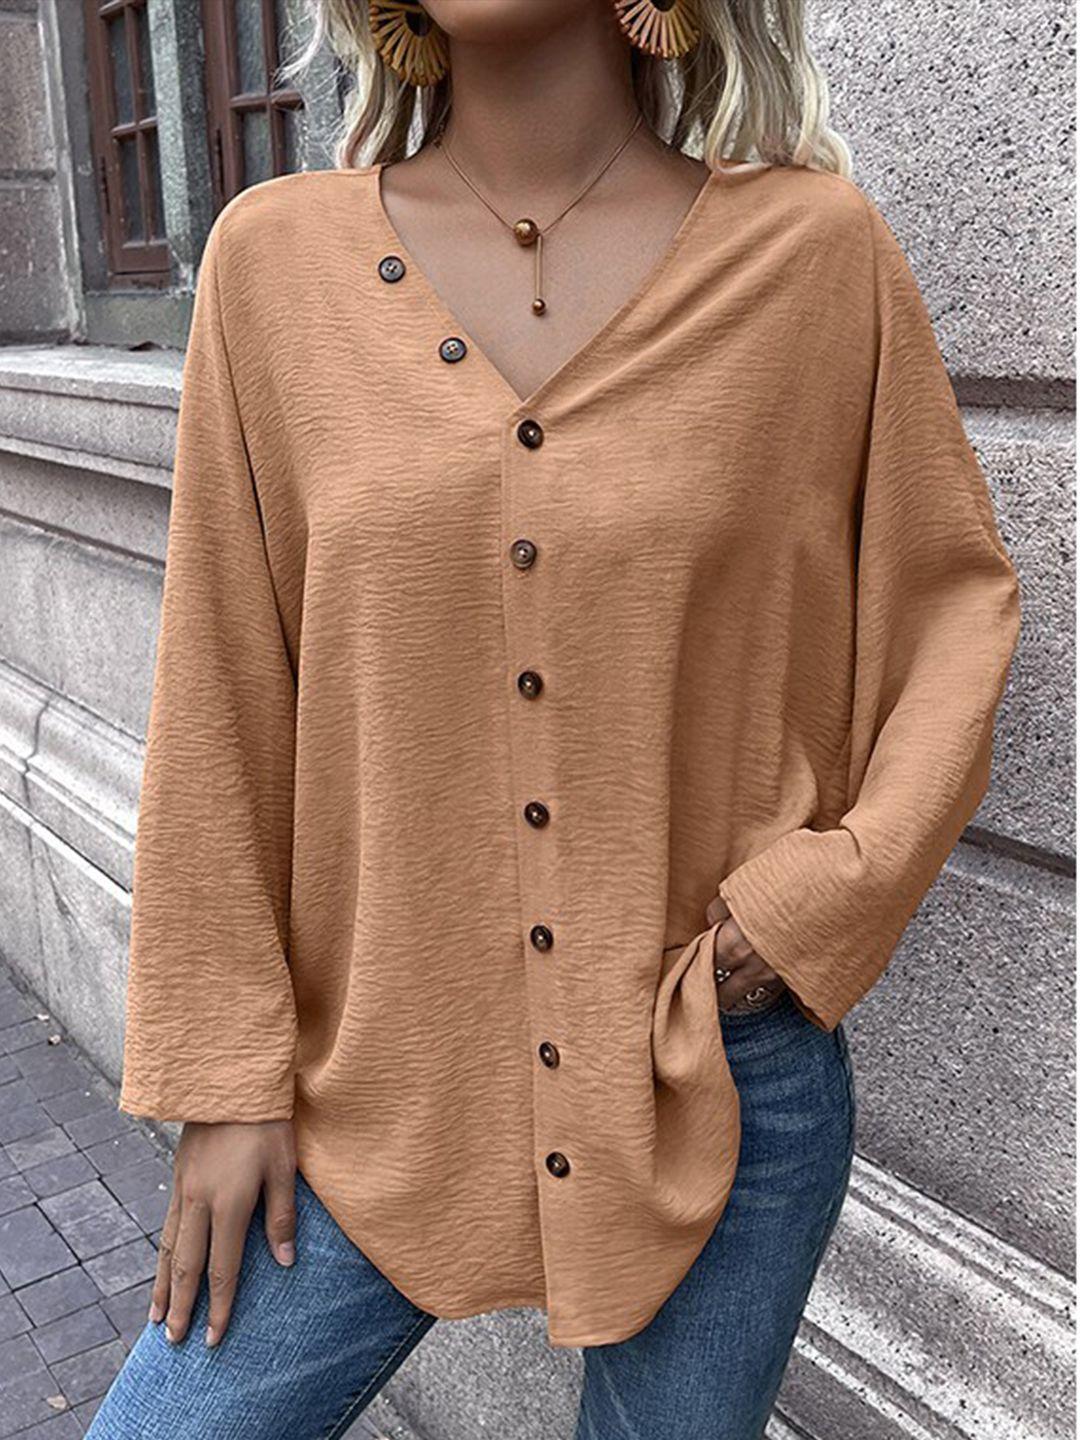 stylecast women khaki opaque casual shirt